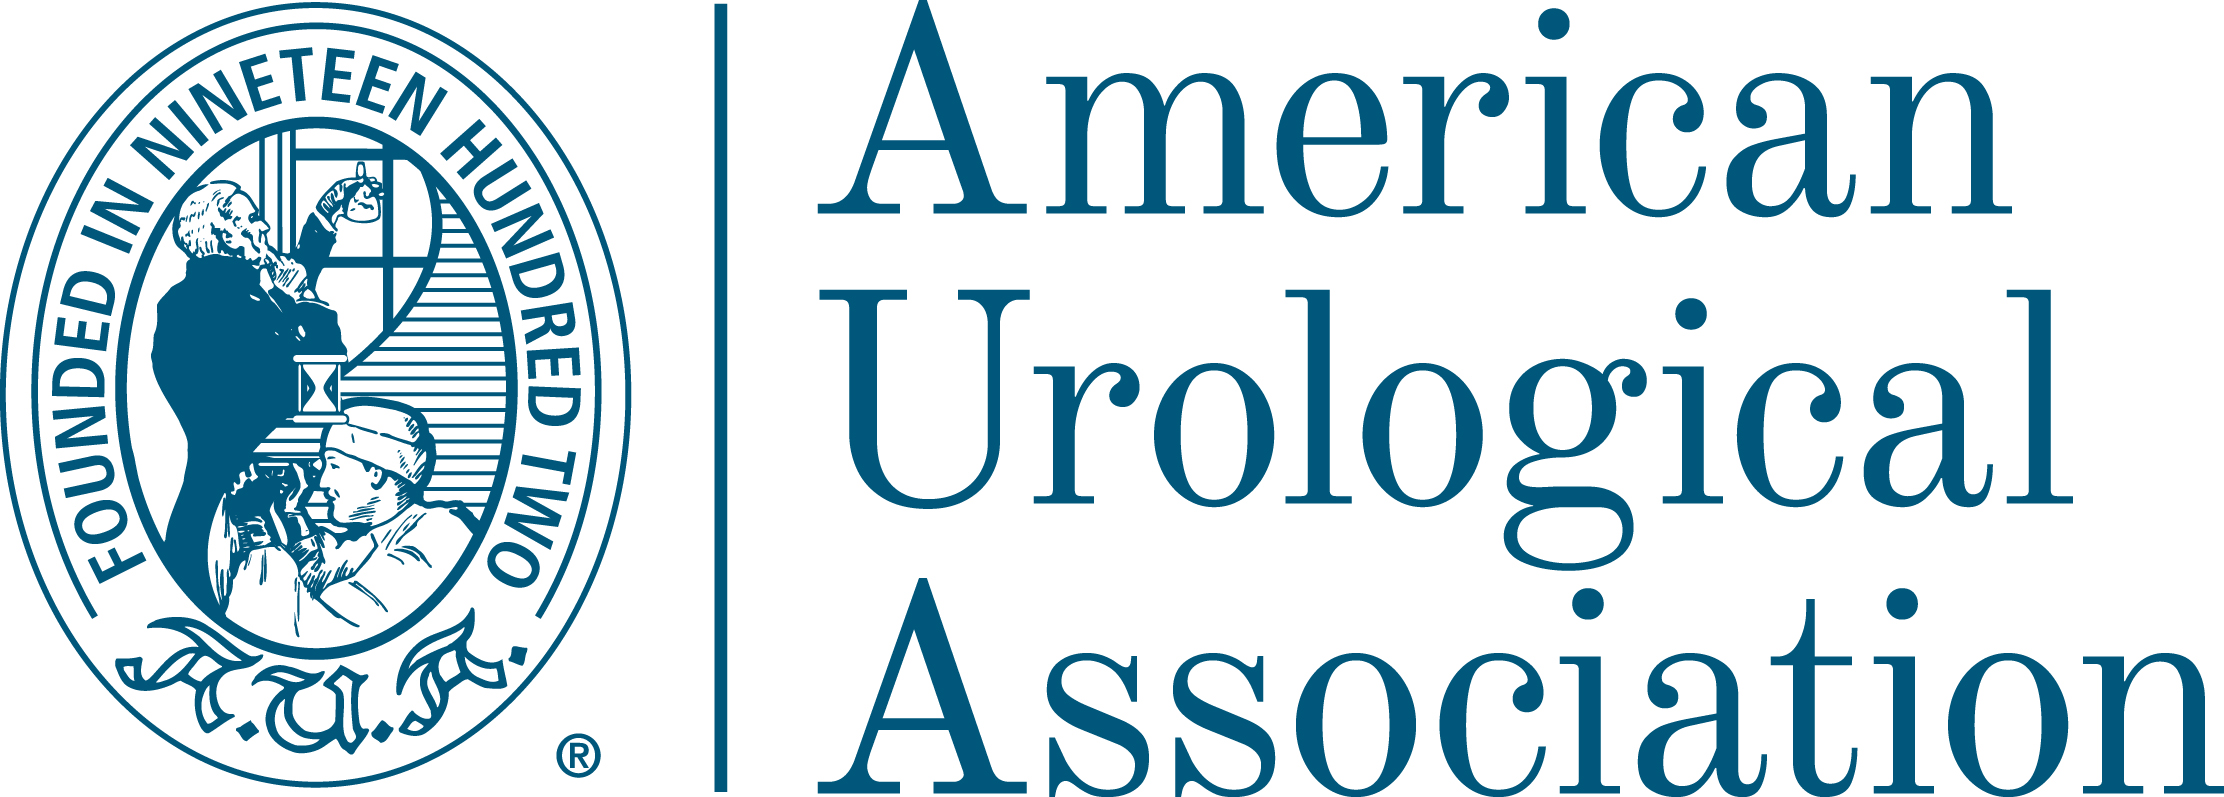 American Urological 